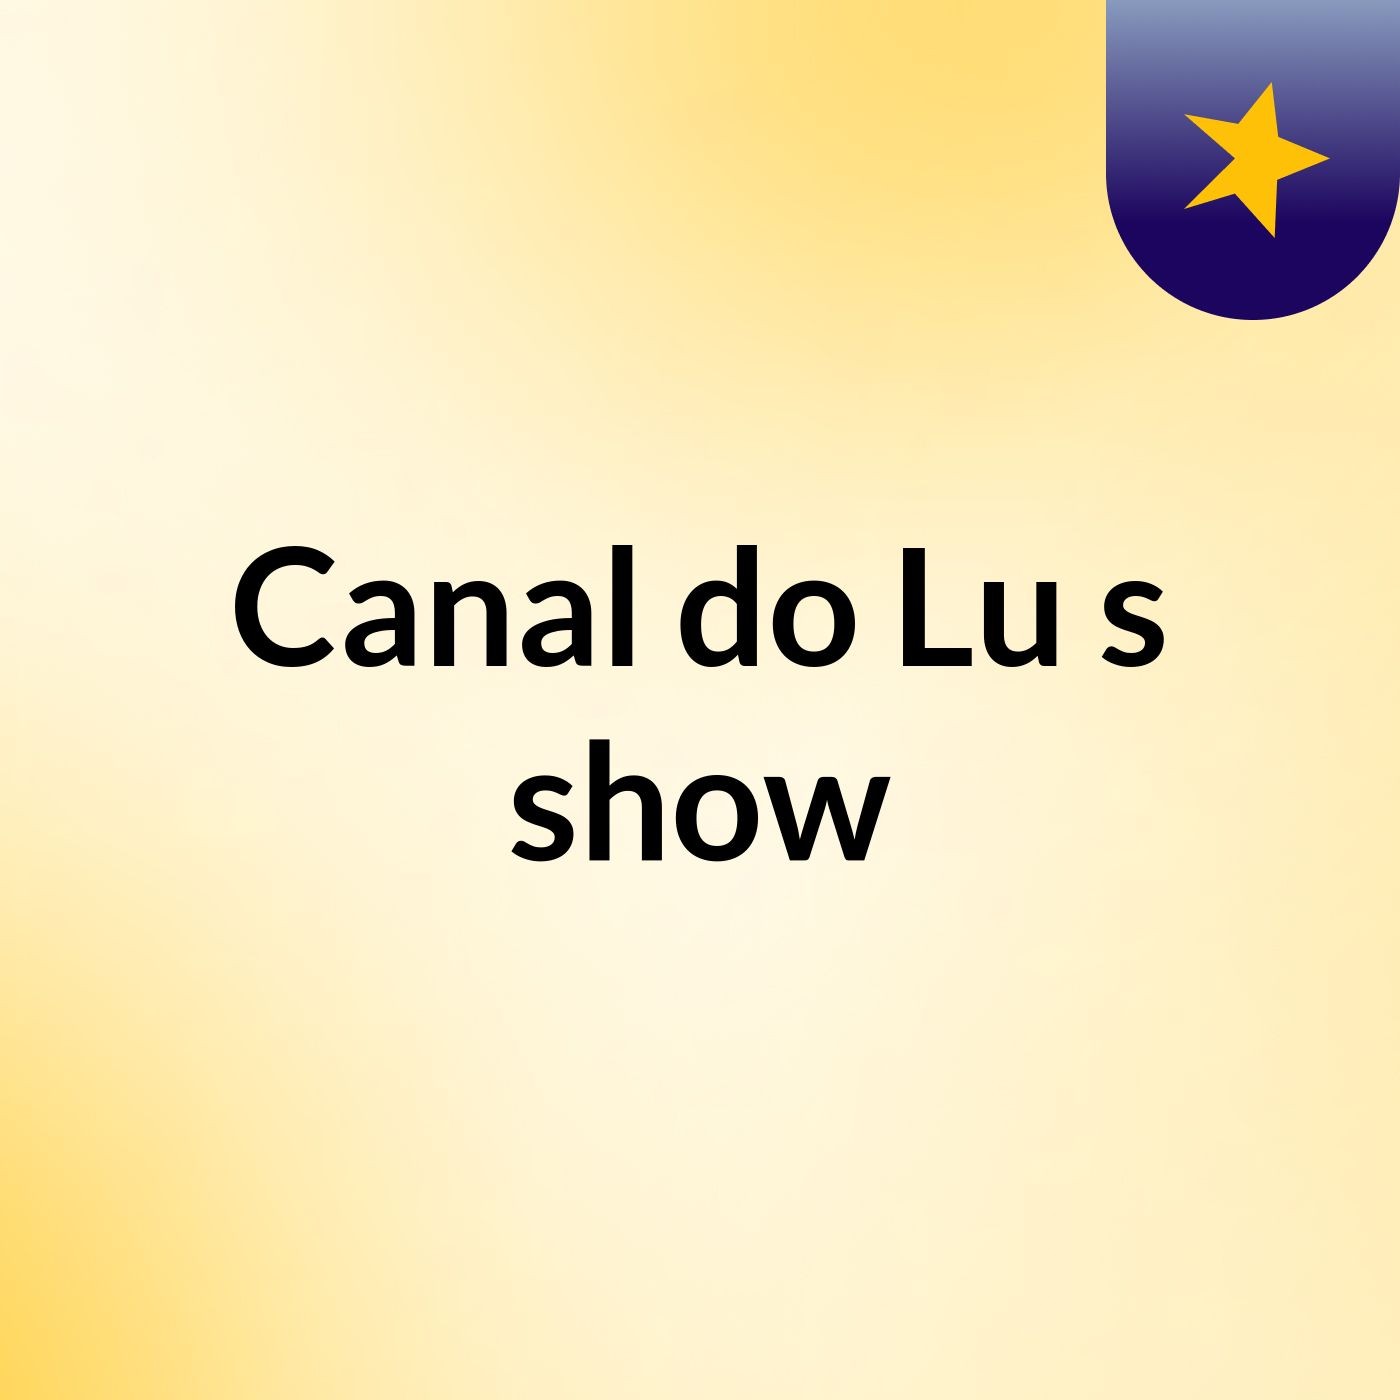 Canal do Lu's show